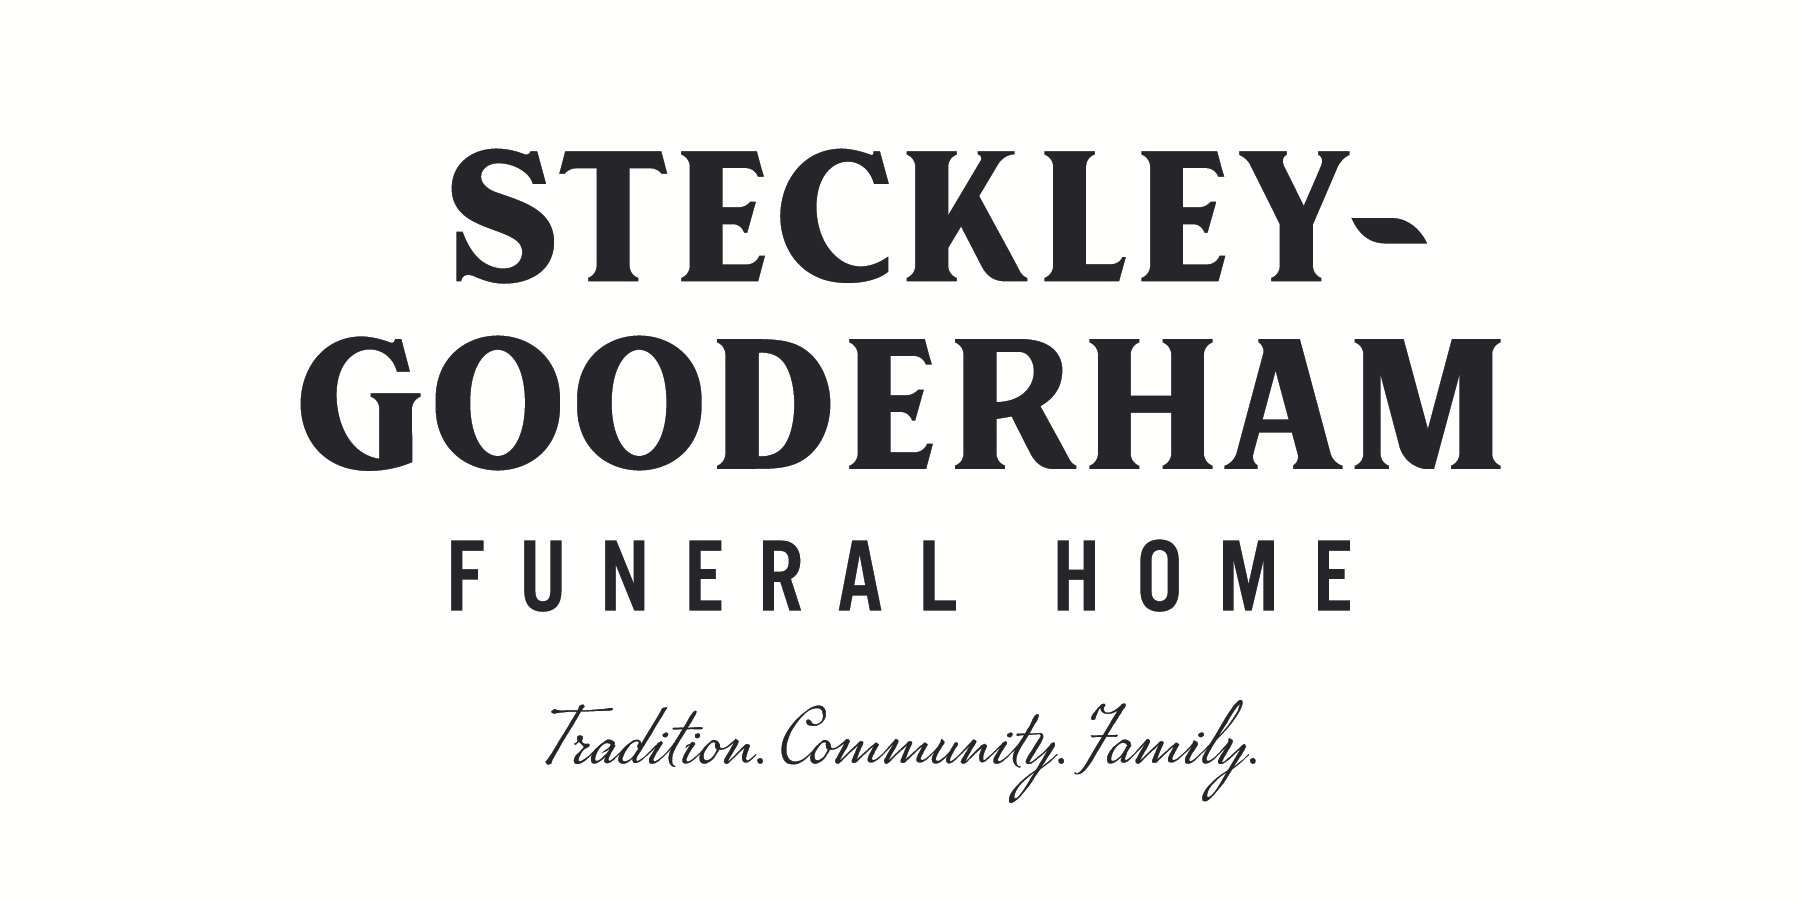 Steckley Gooderham Funeral Home